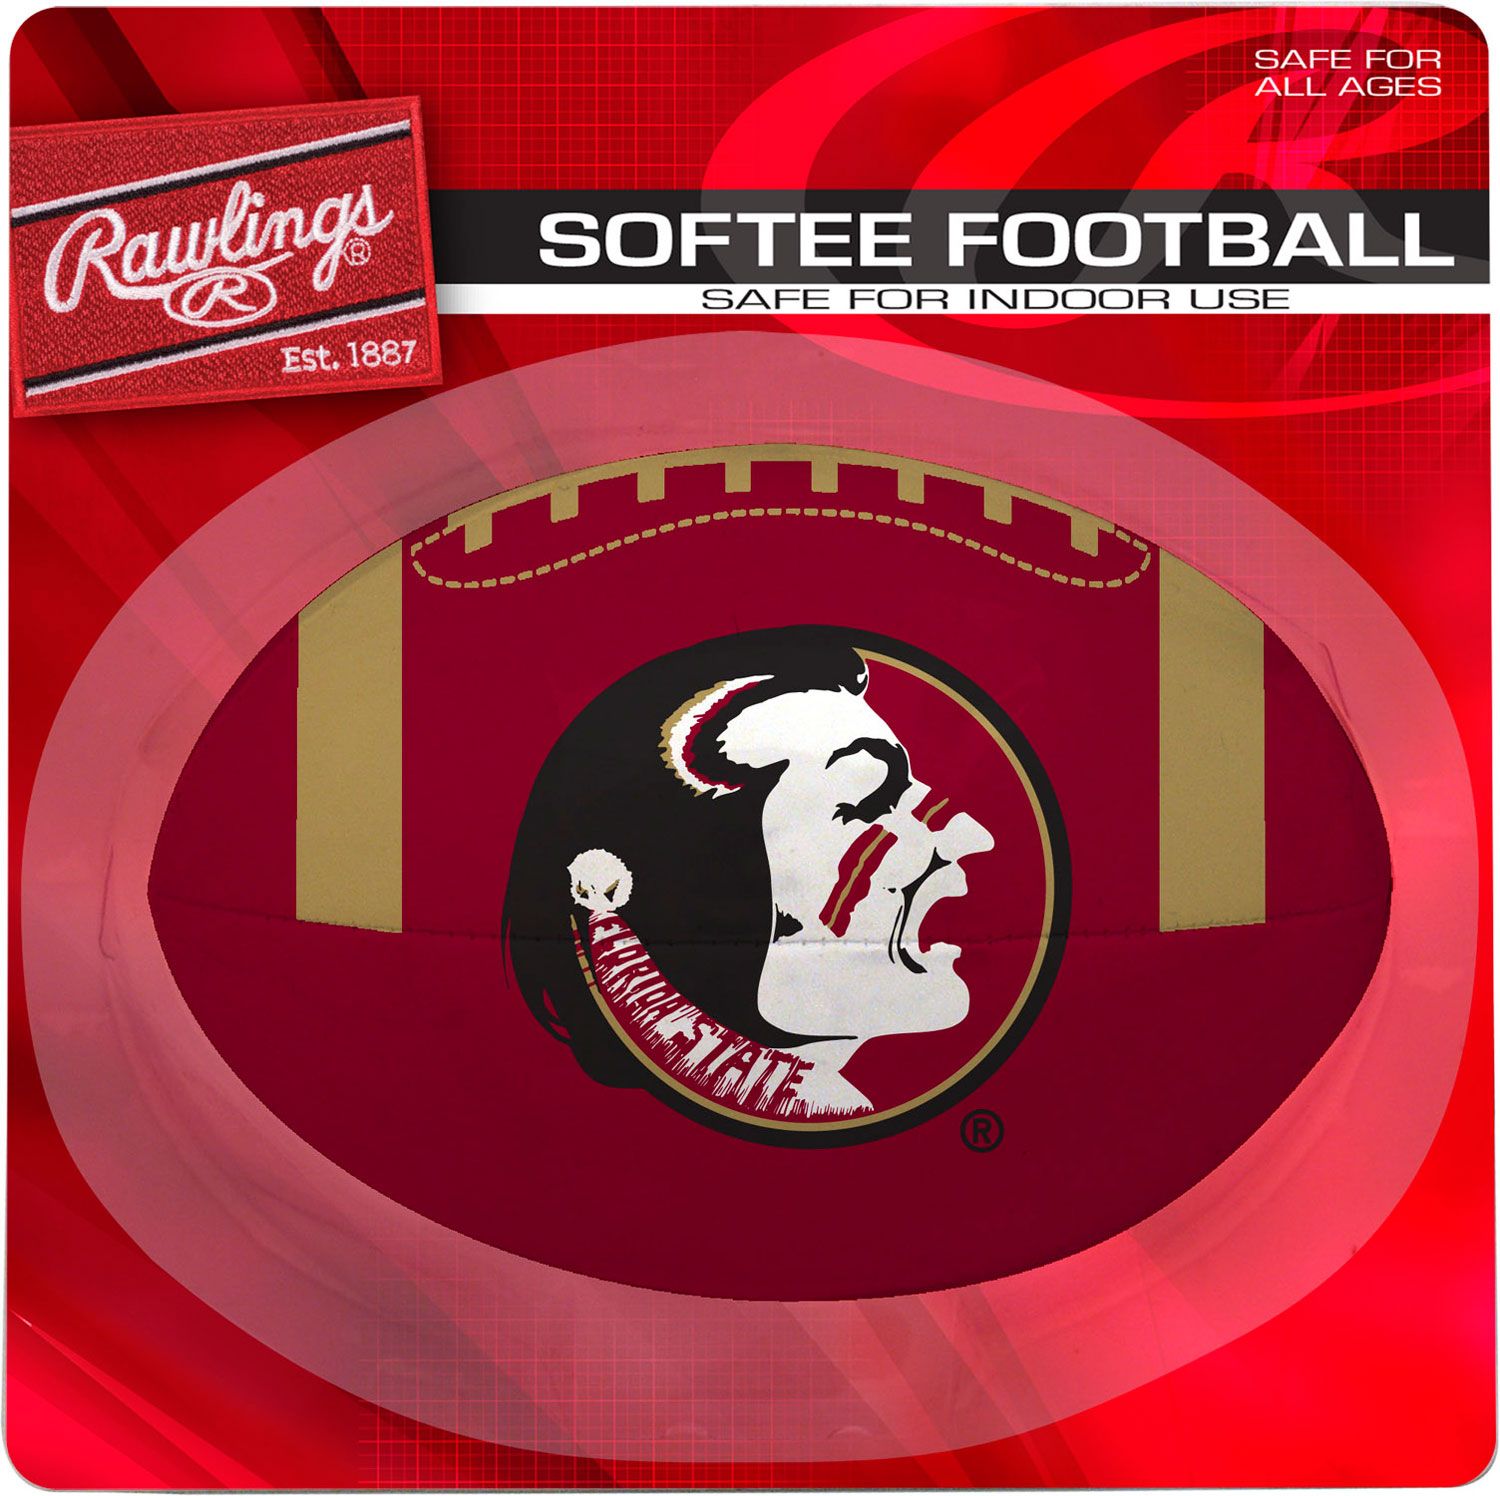 Rawlings Florida State University Seminoles "Quick Toss" 4" Softie Football - image 1 of 1